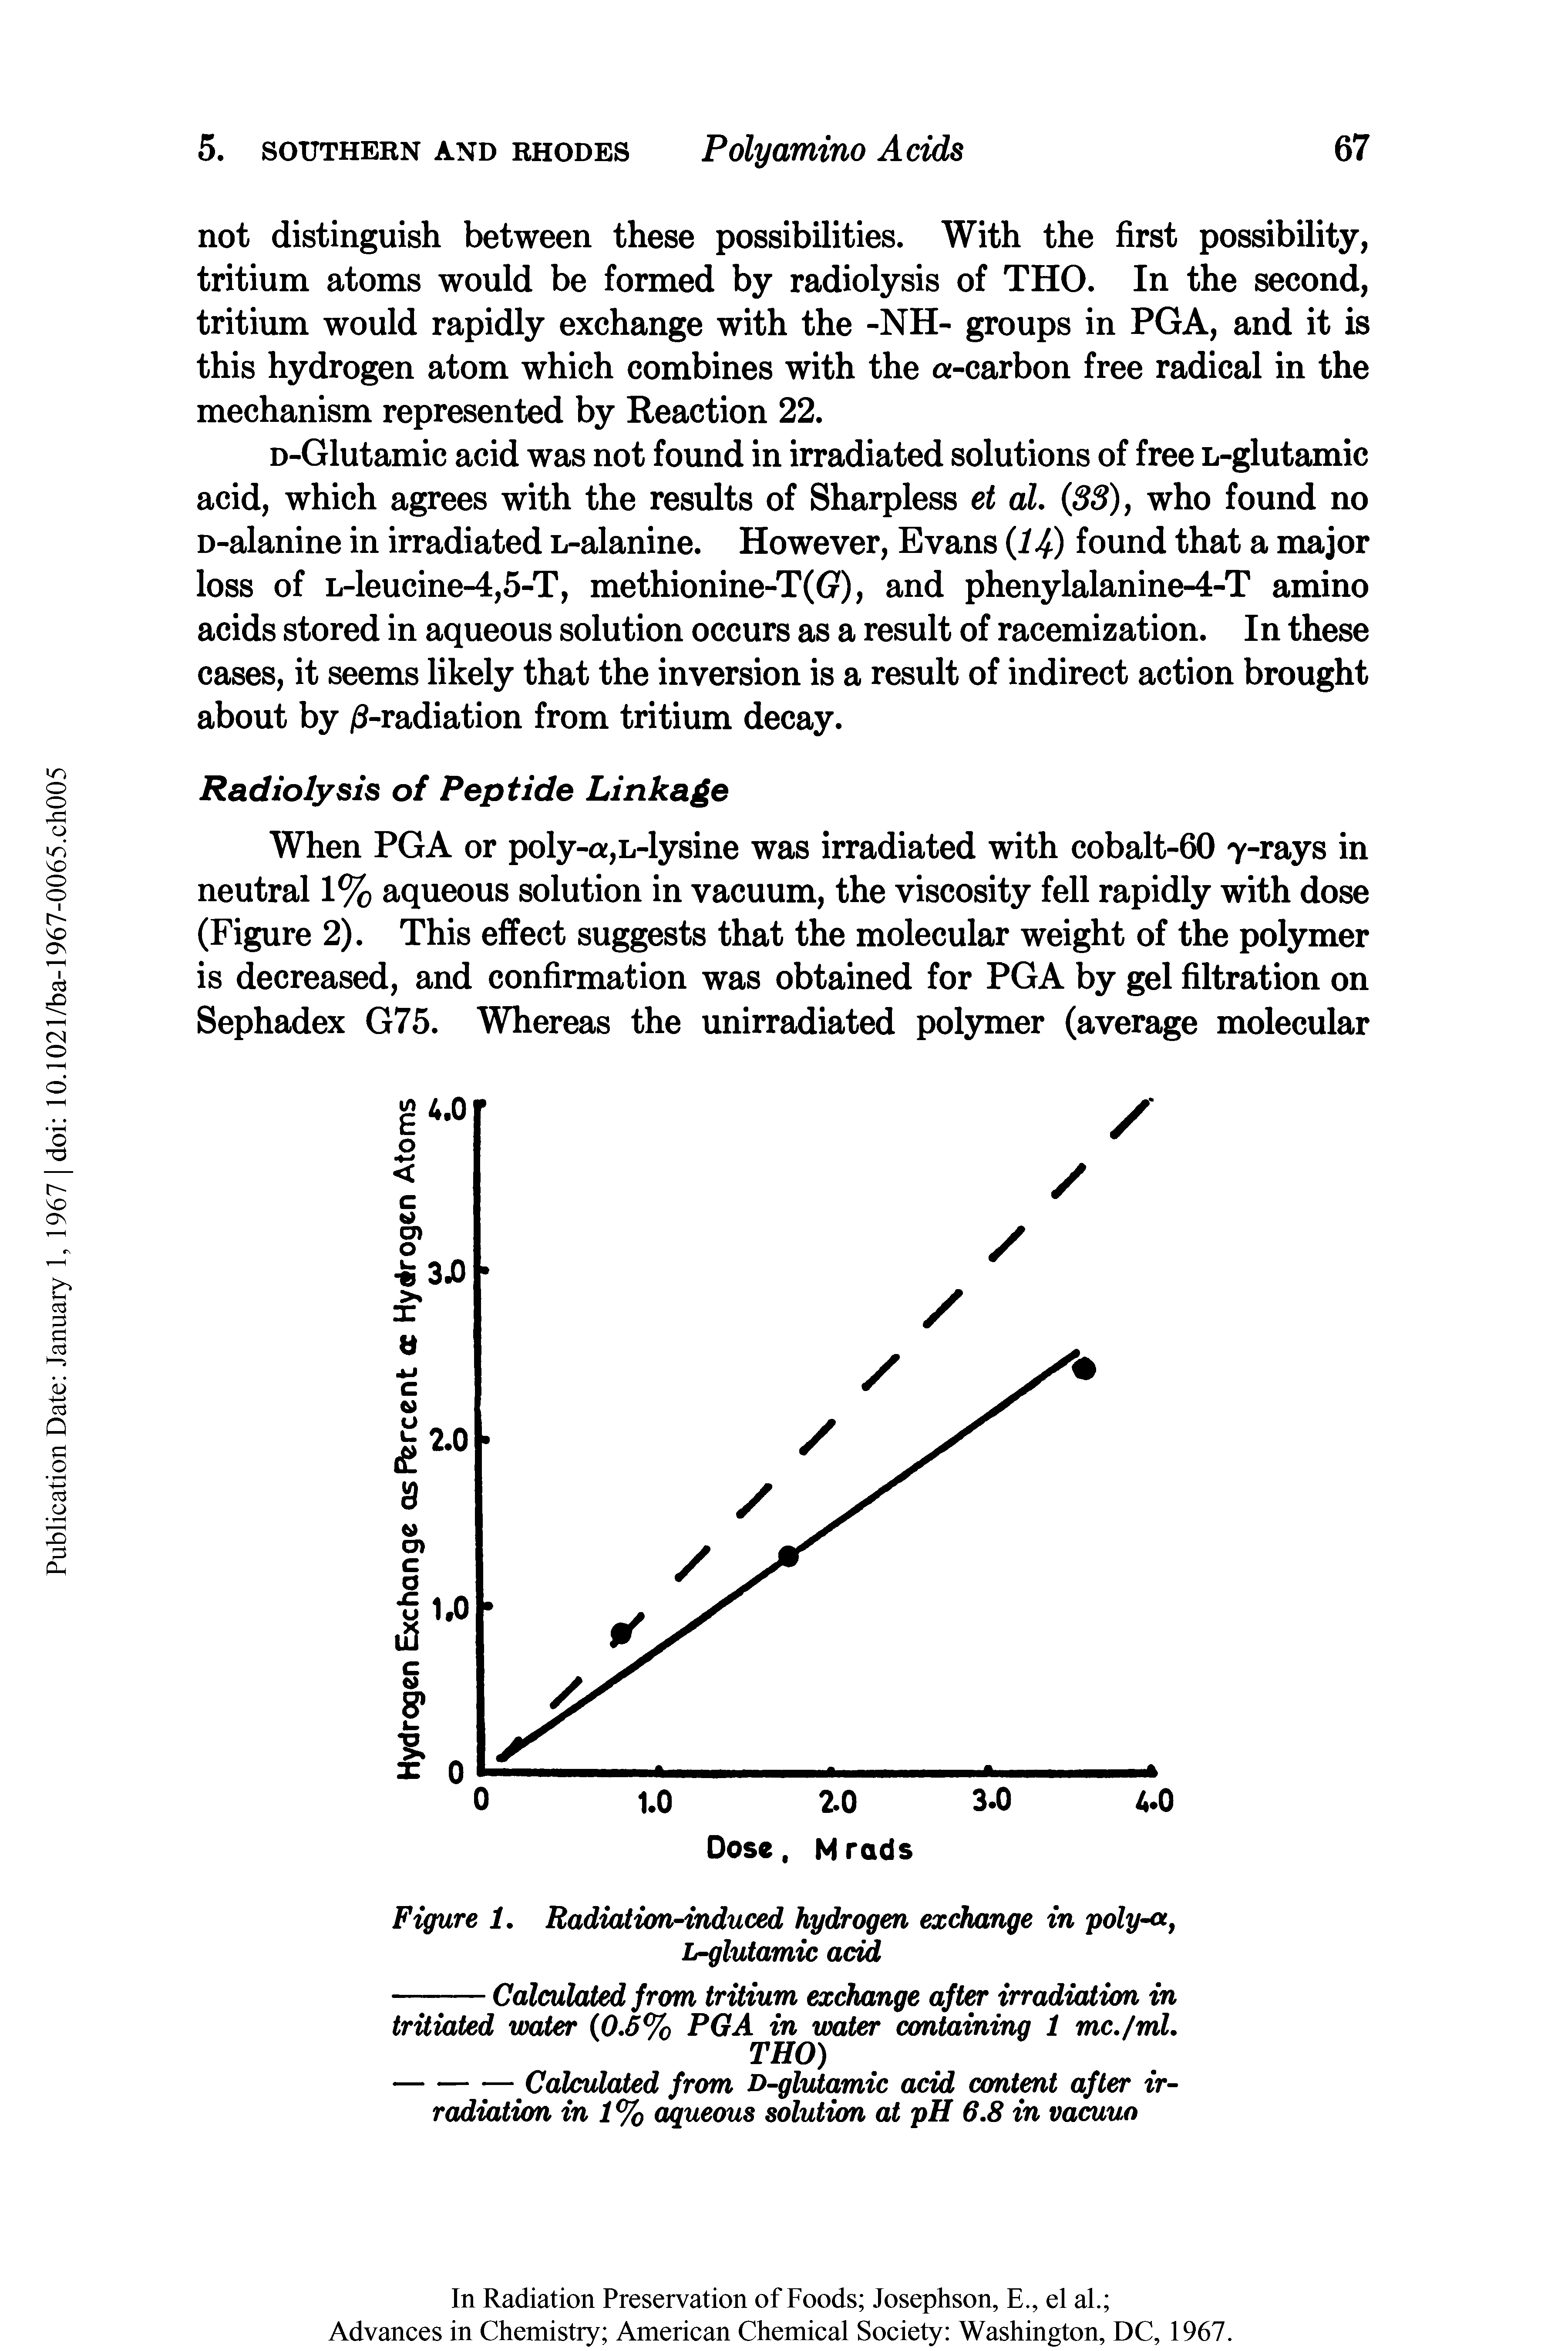 Figure 1. Radiation-induced hydrogen exchange in poly-a, L-glutamic add...